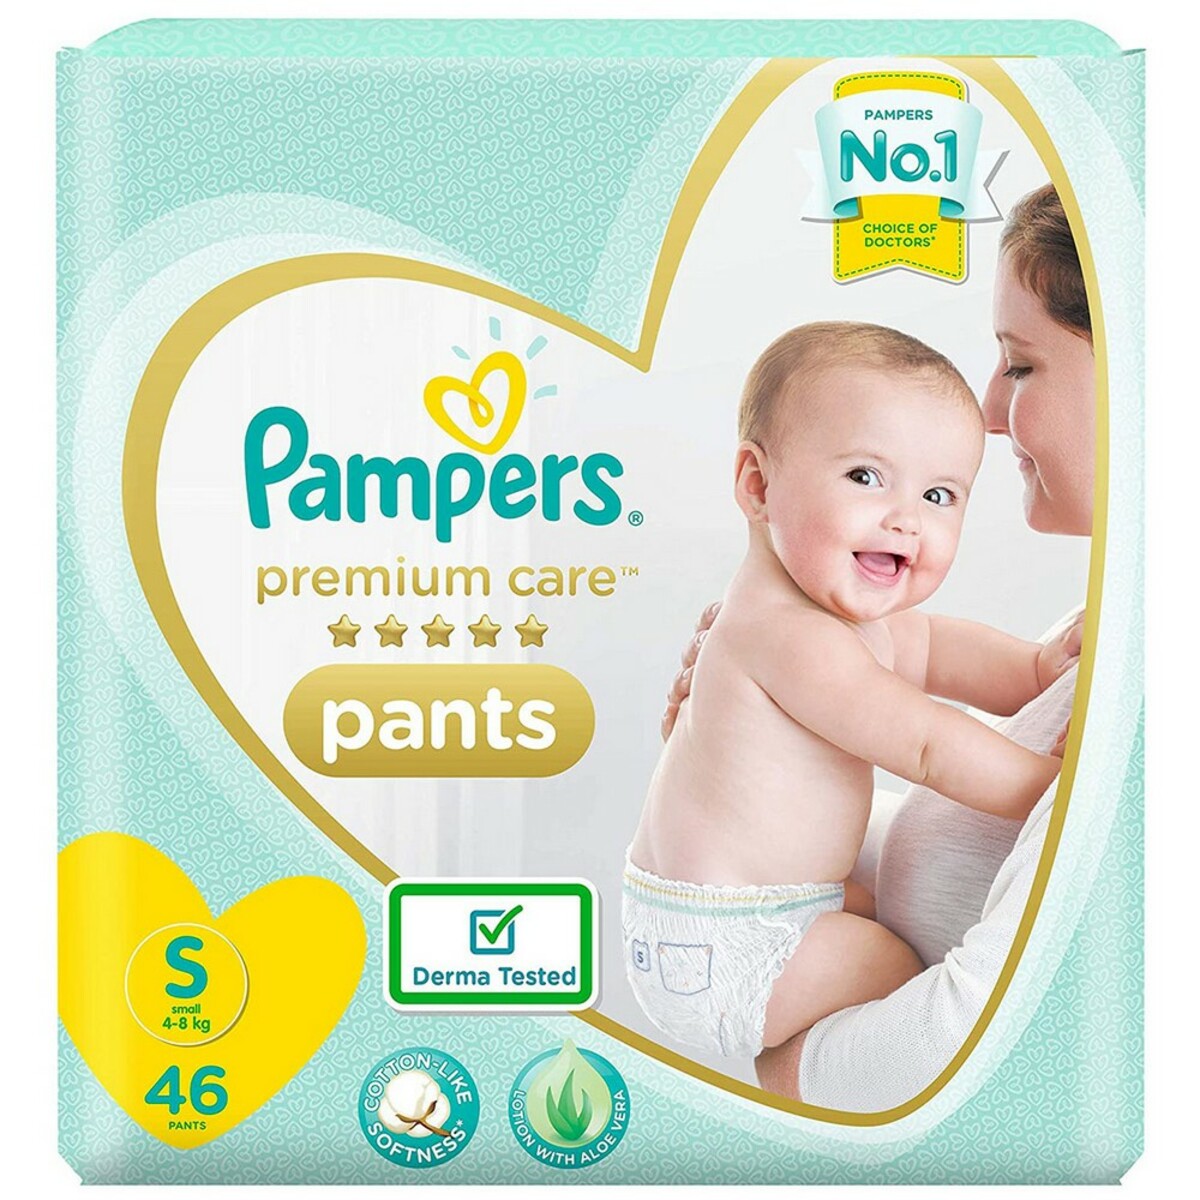 Pampers Premium Pants SM 36s